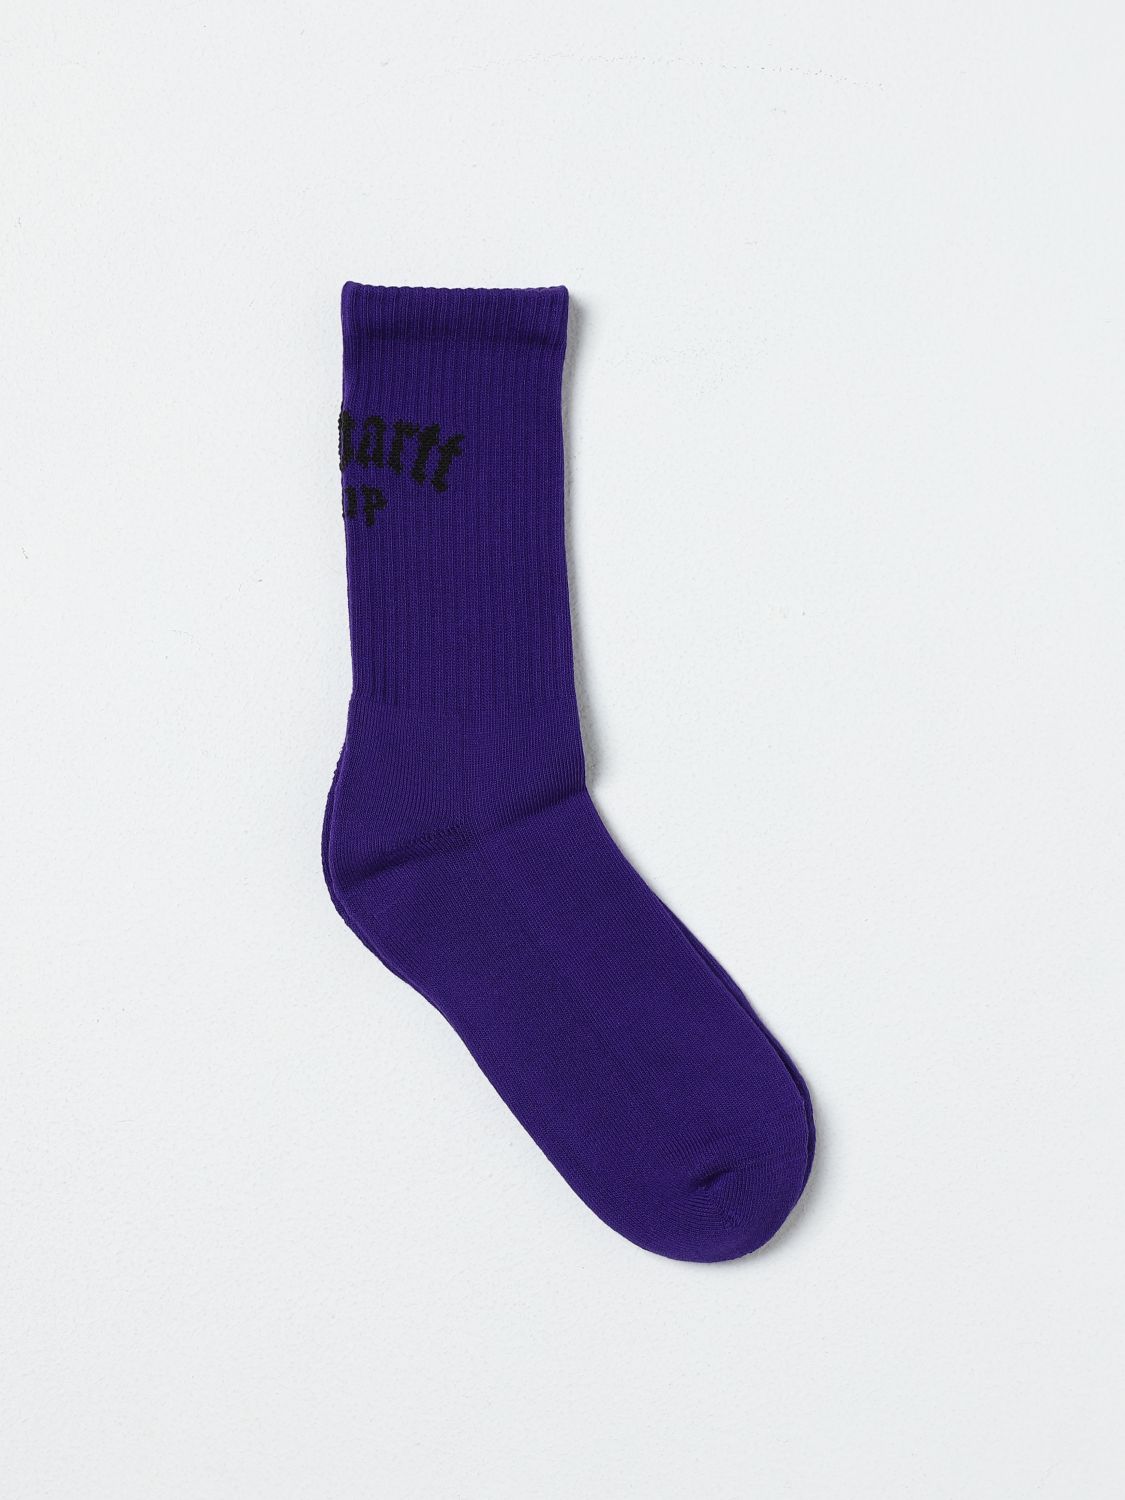 Carhartt Socken  Wip Herren Farbe Violett